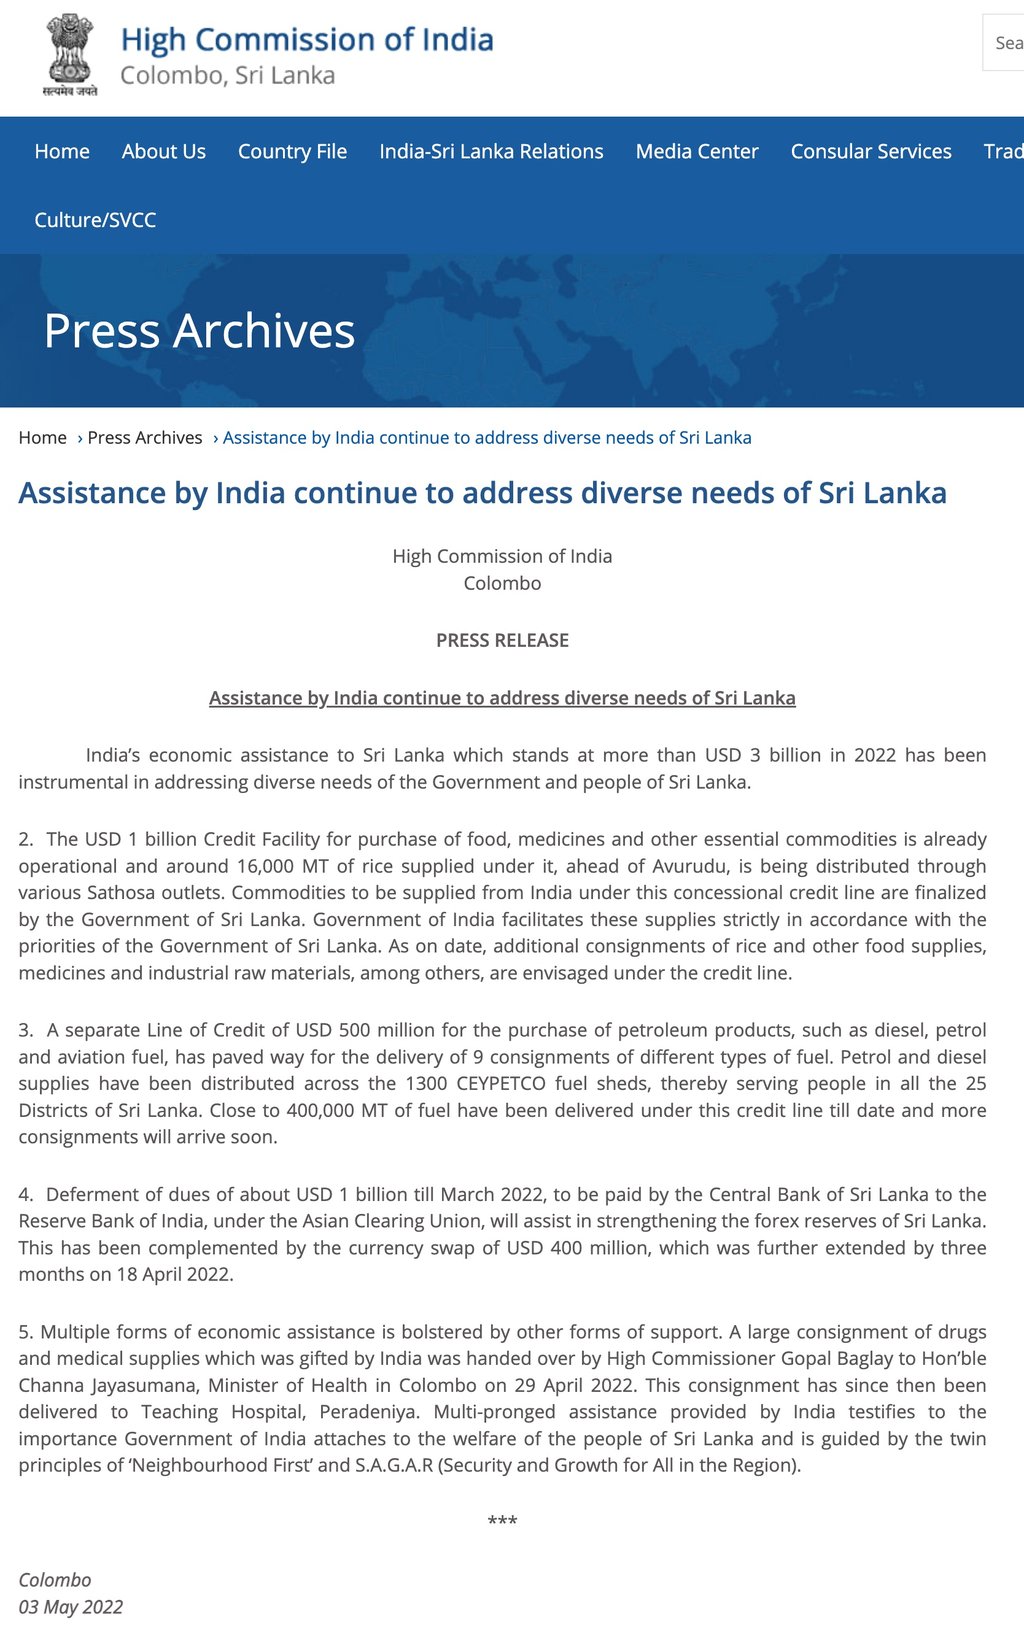 Indian assistance to Sri Lanka